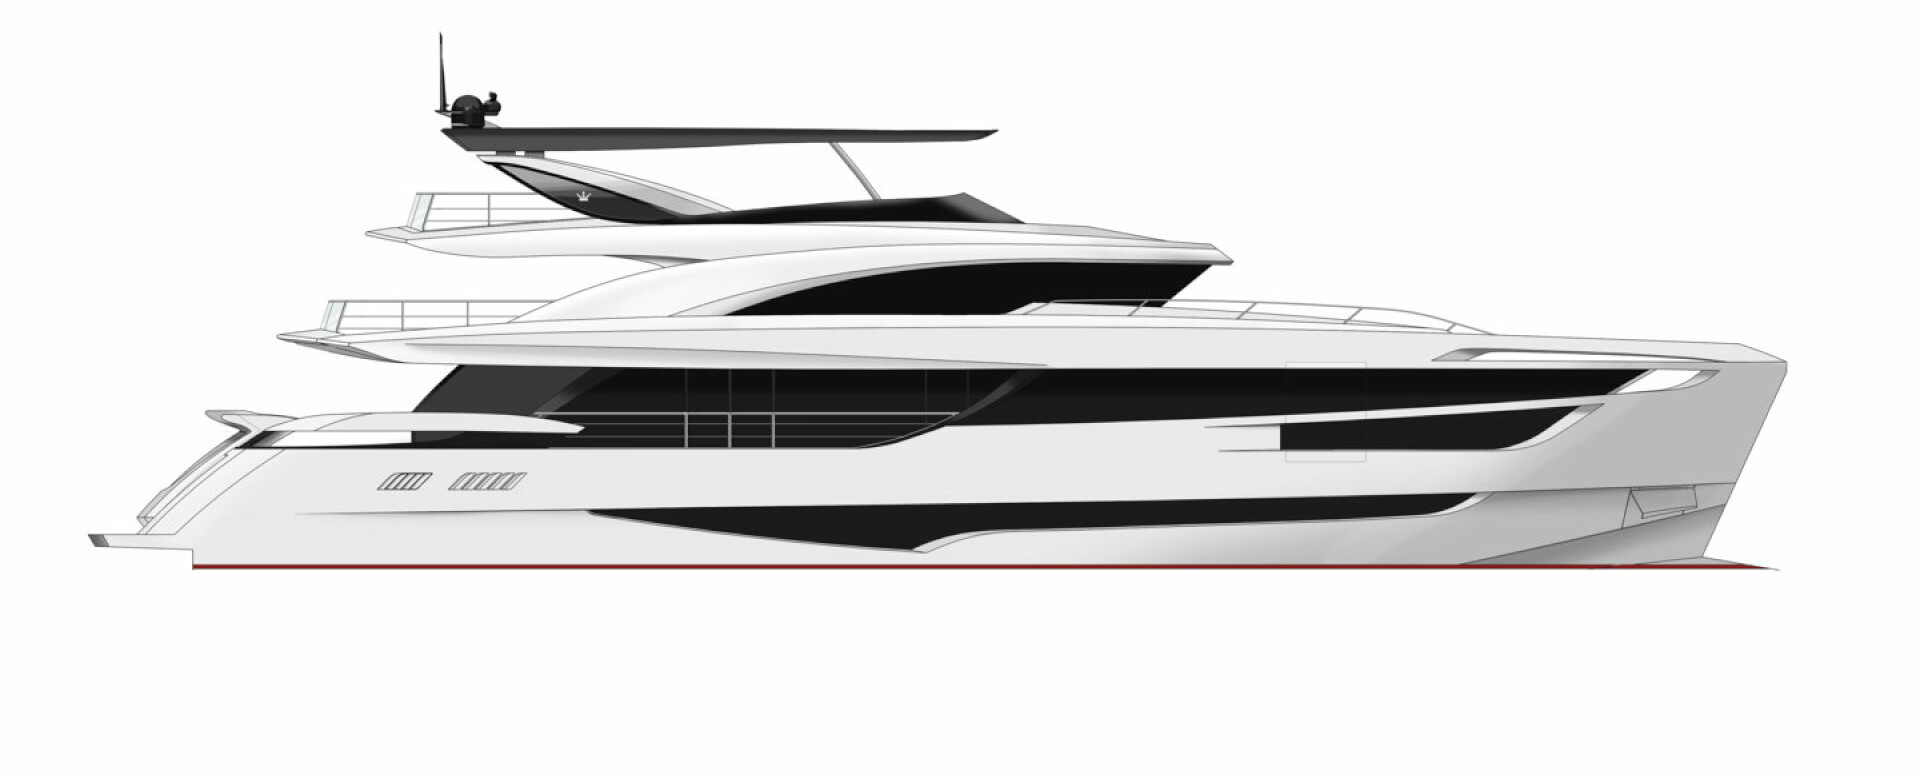                                                                                                     Dominator adds two new tri-deck yachts to its Ilumen range
                                                                                            